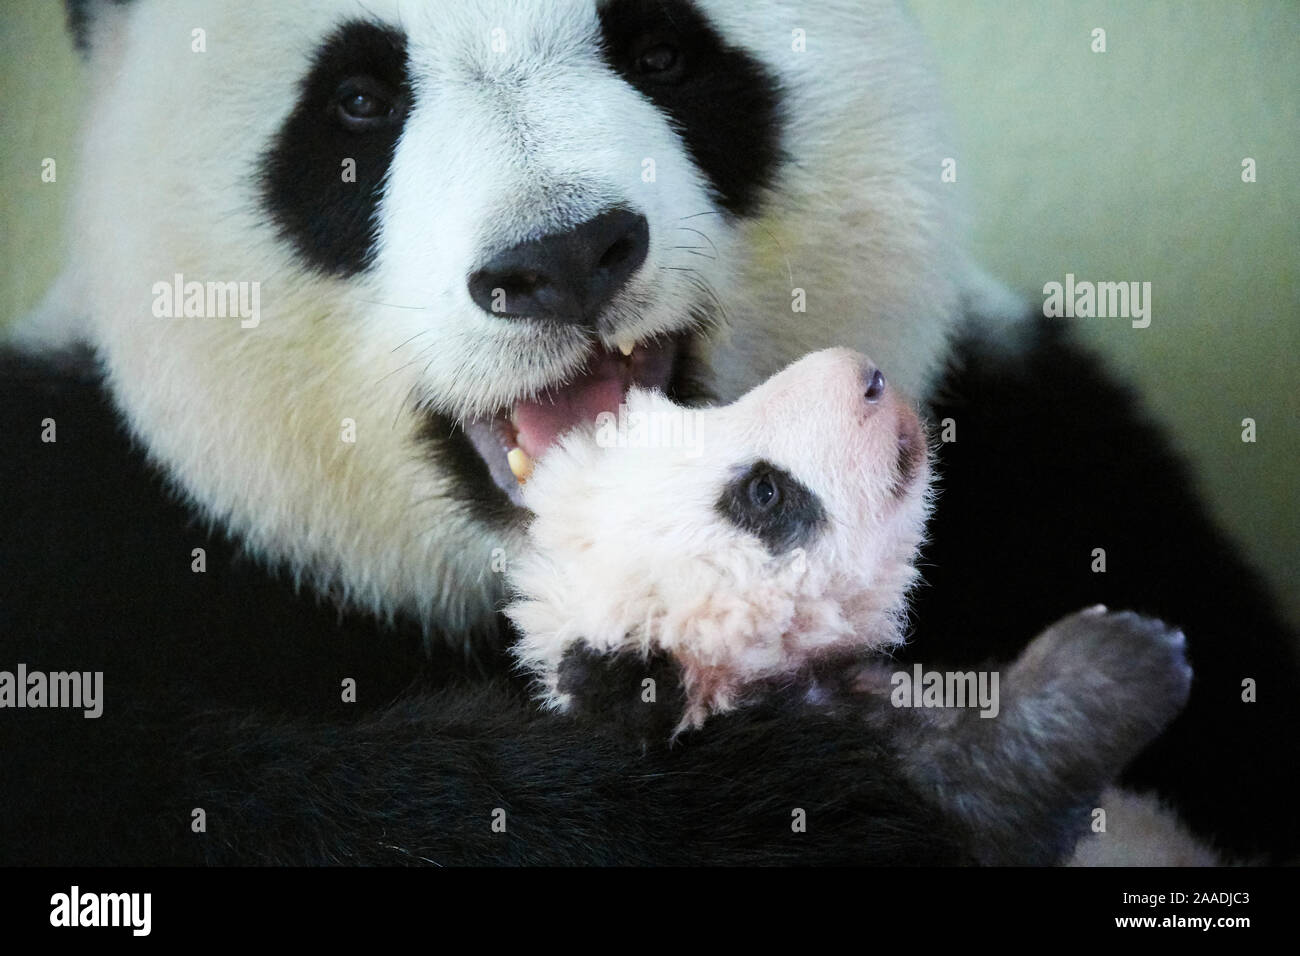 Giant panda (Ailuropoda melanoleuca) female, Huan Huan, holding baby, aged two months, Beauval Zoo, France, October 2017. Stock Photo